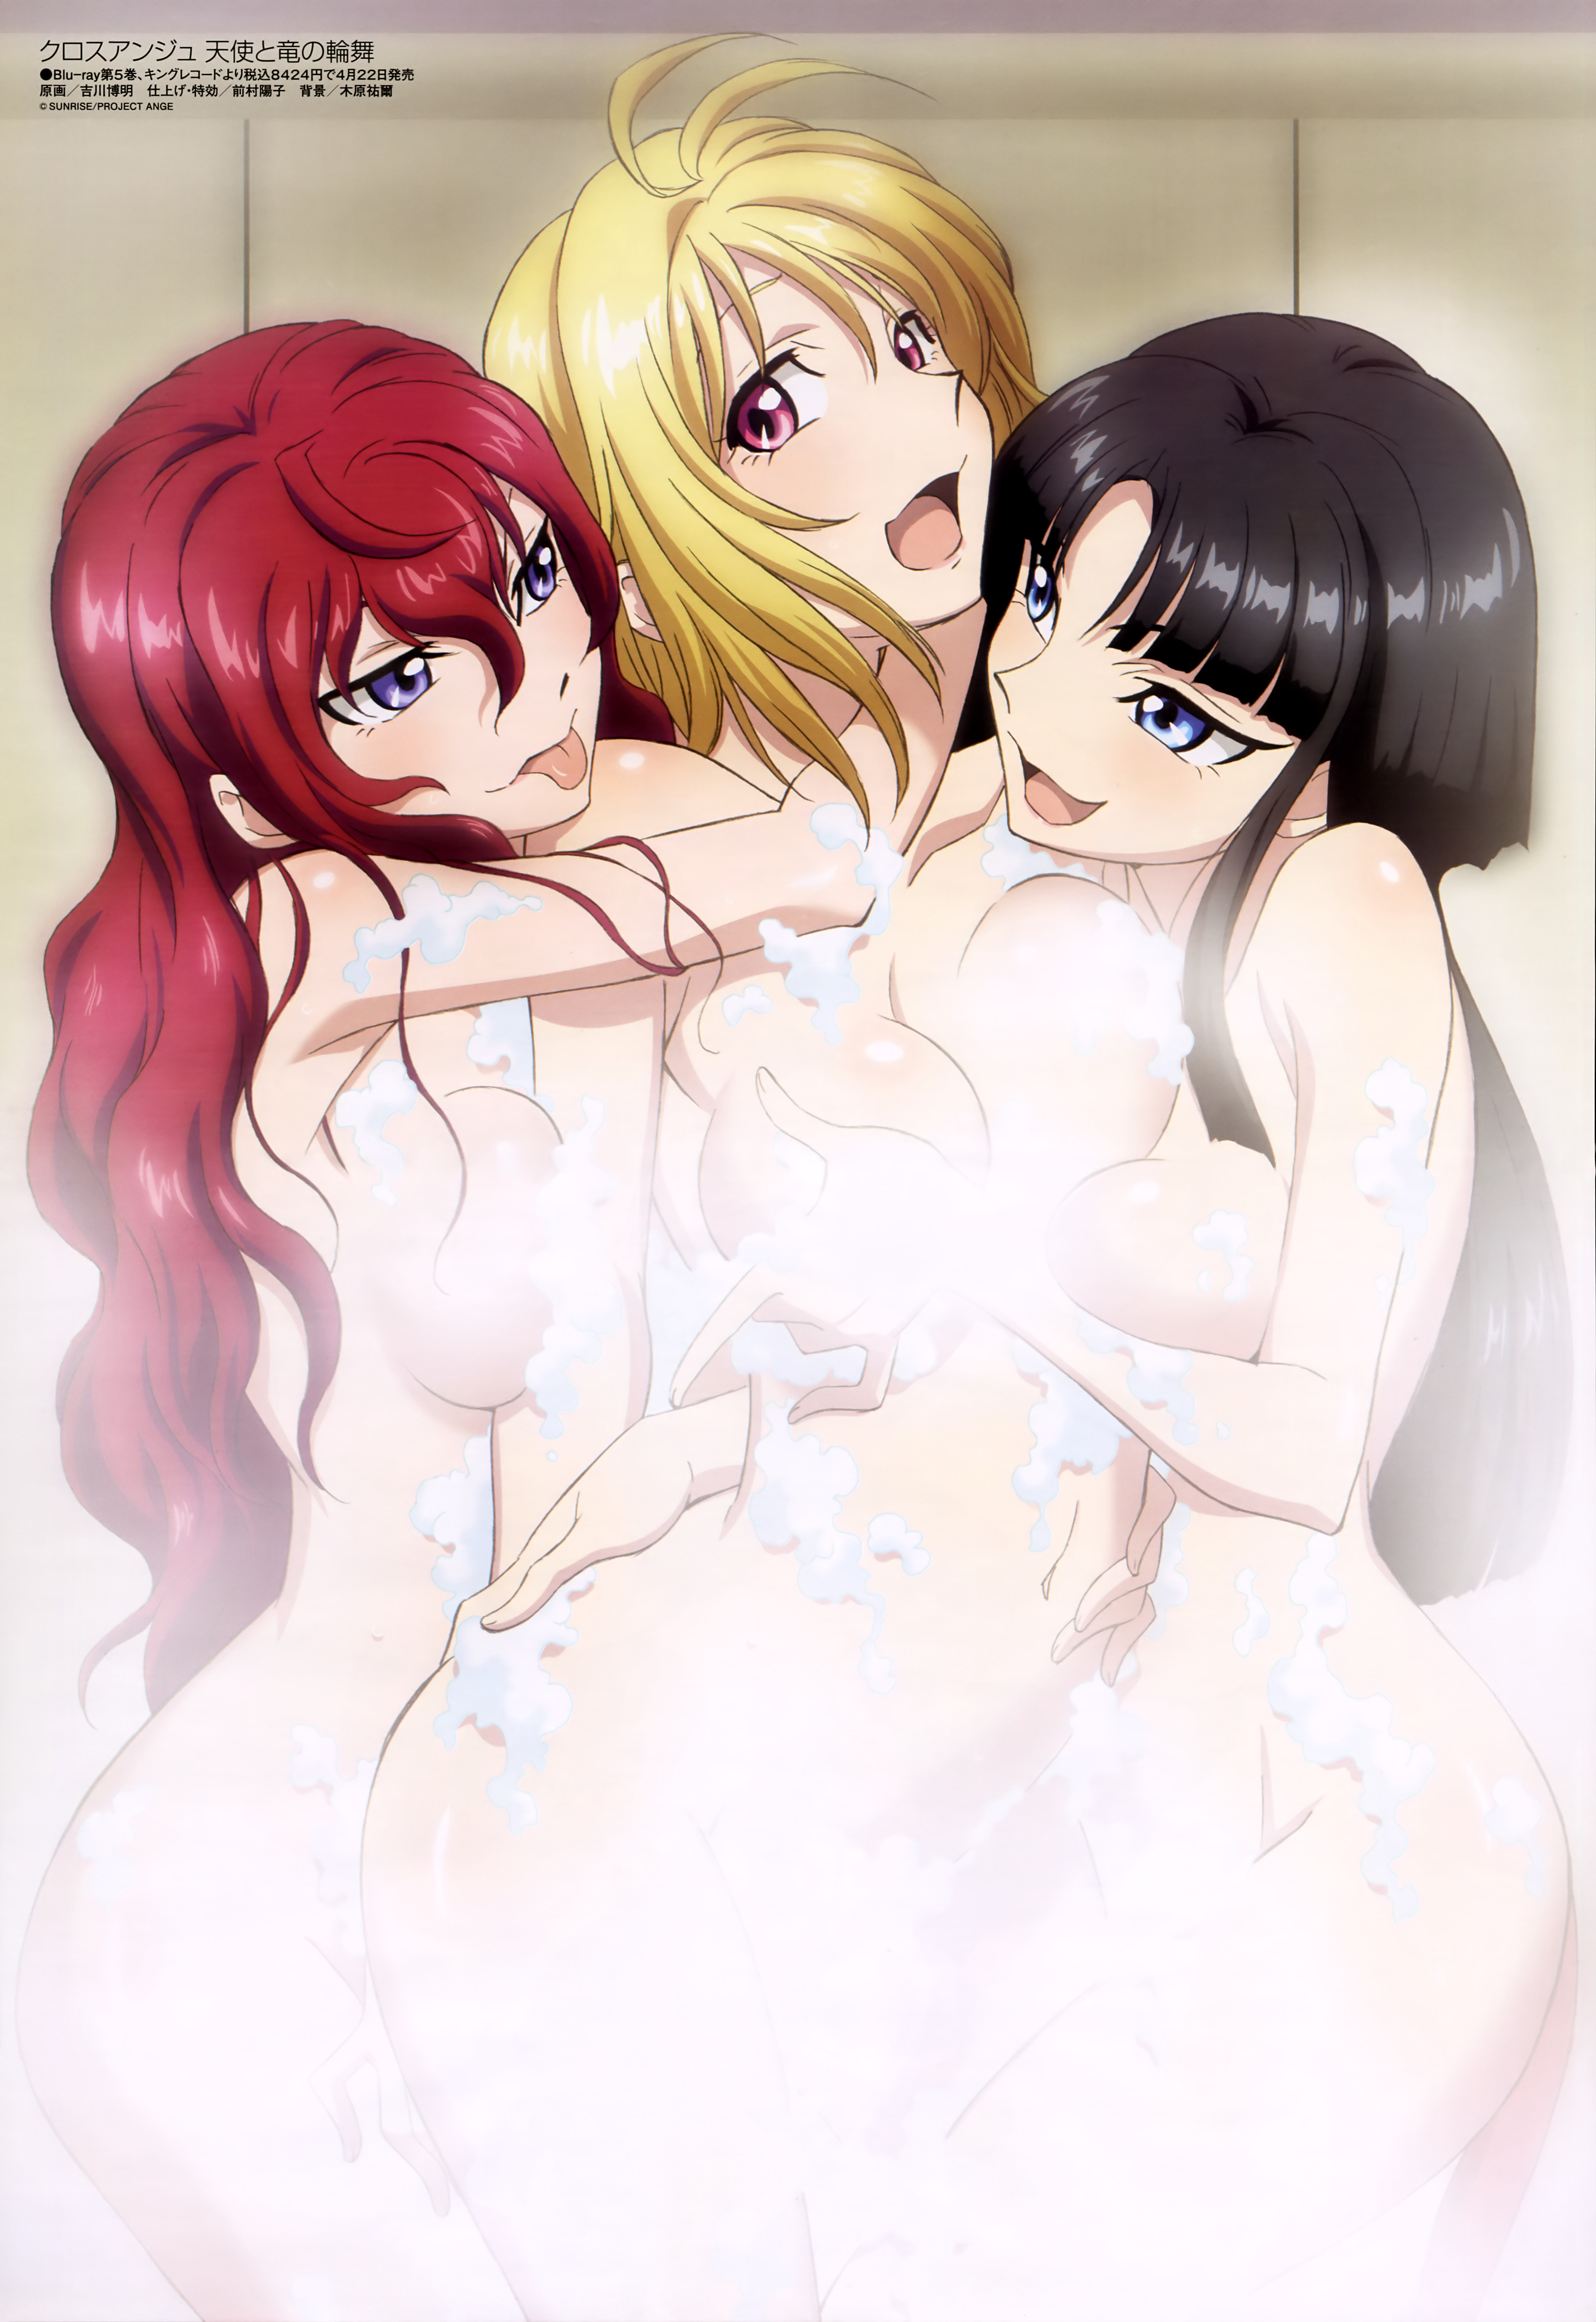 Megami MAGAZINE May 2015 anime posters cross ange angelise ikaruga misurugi hilda sala poster